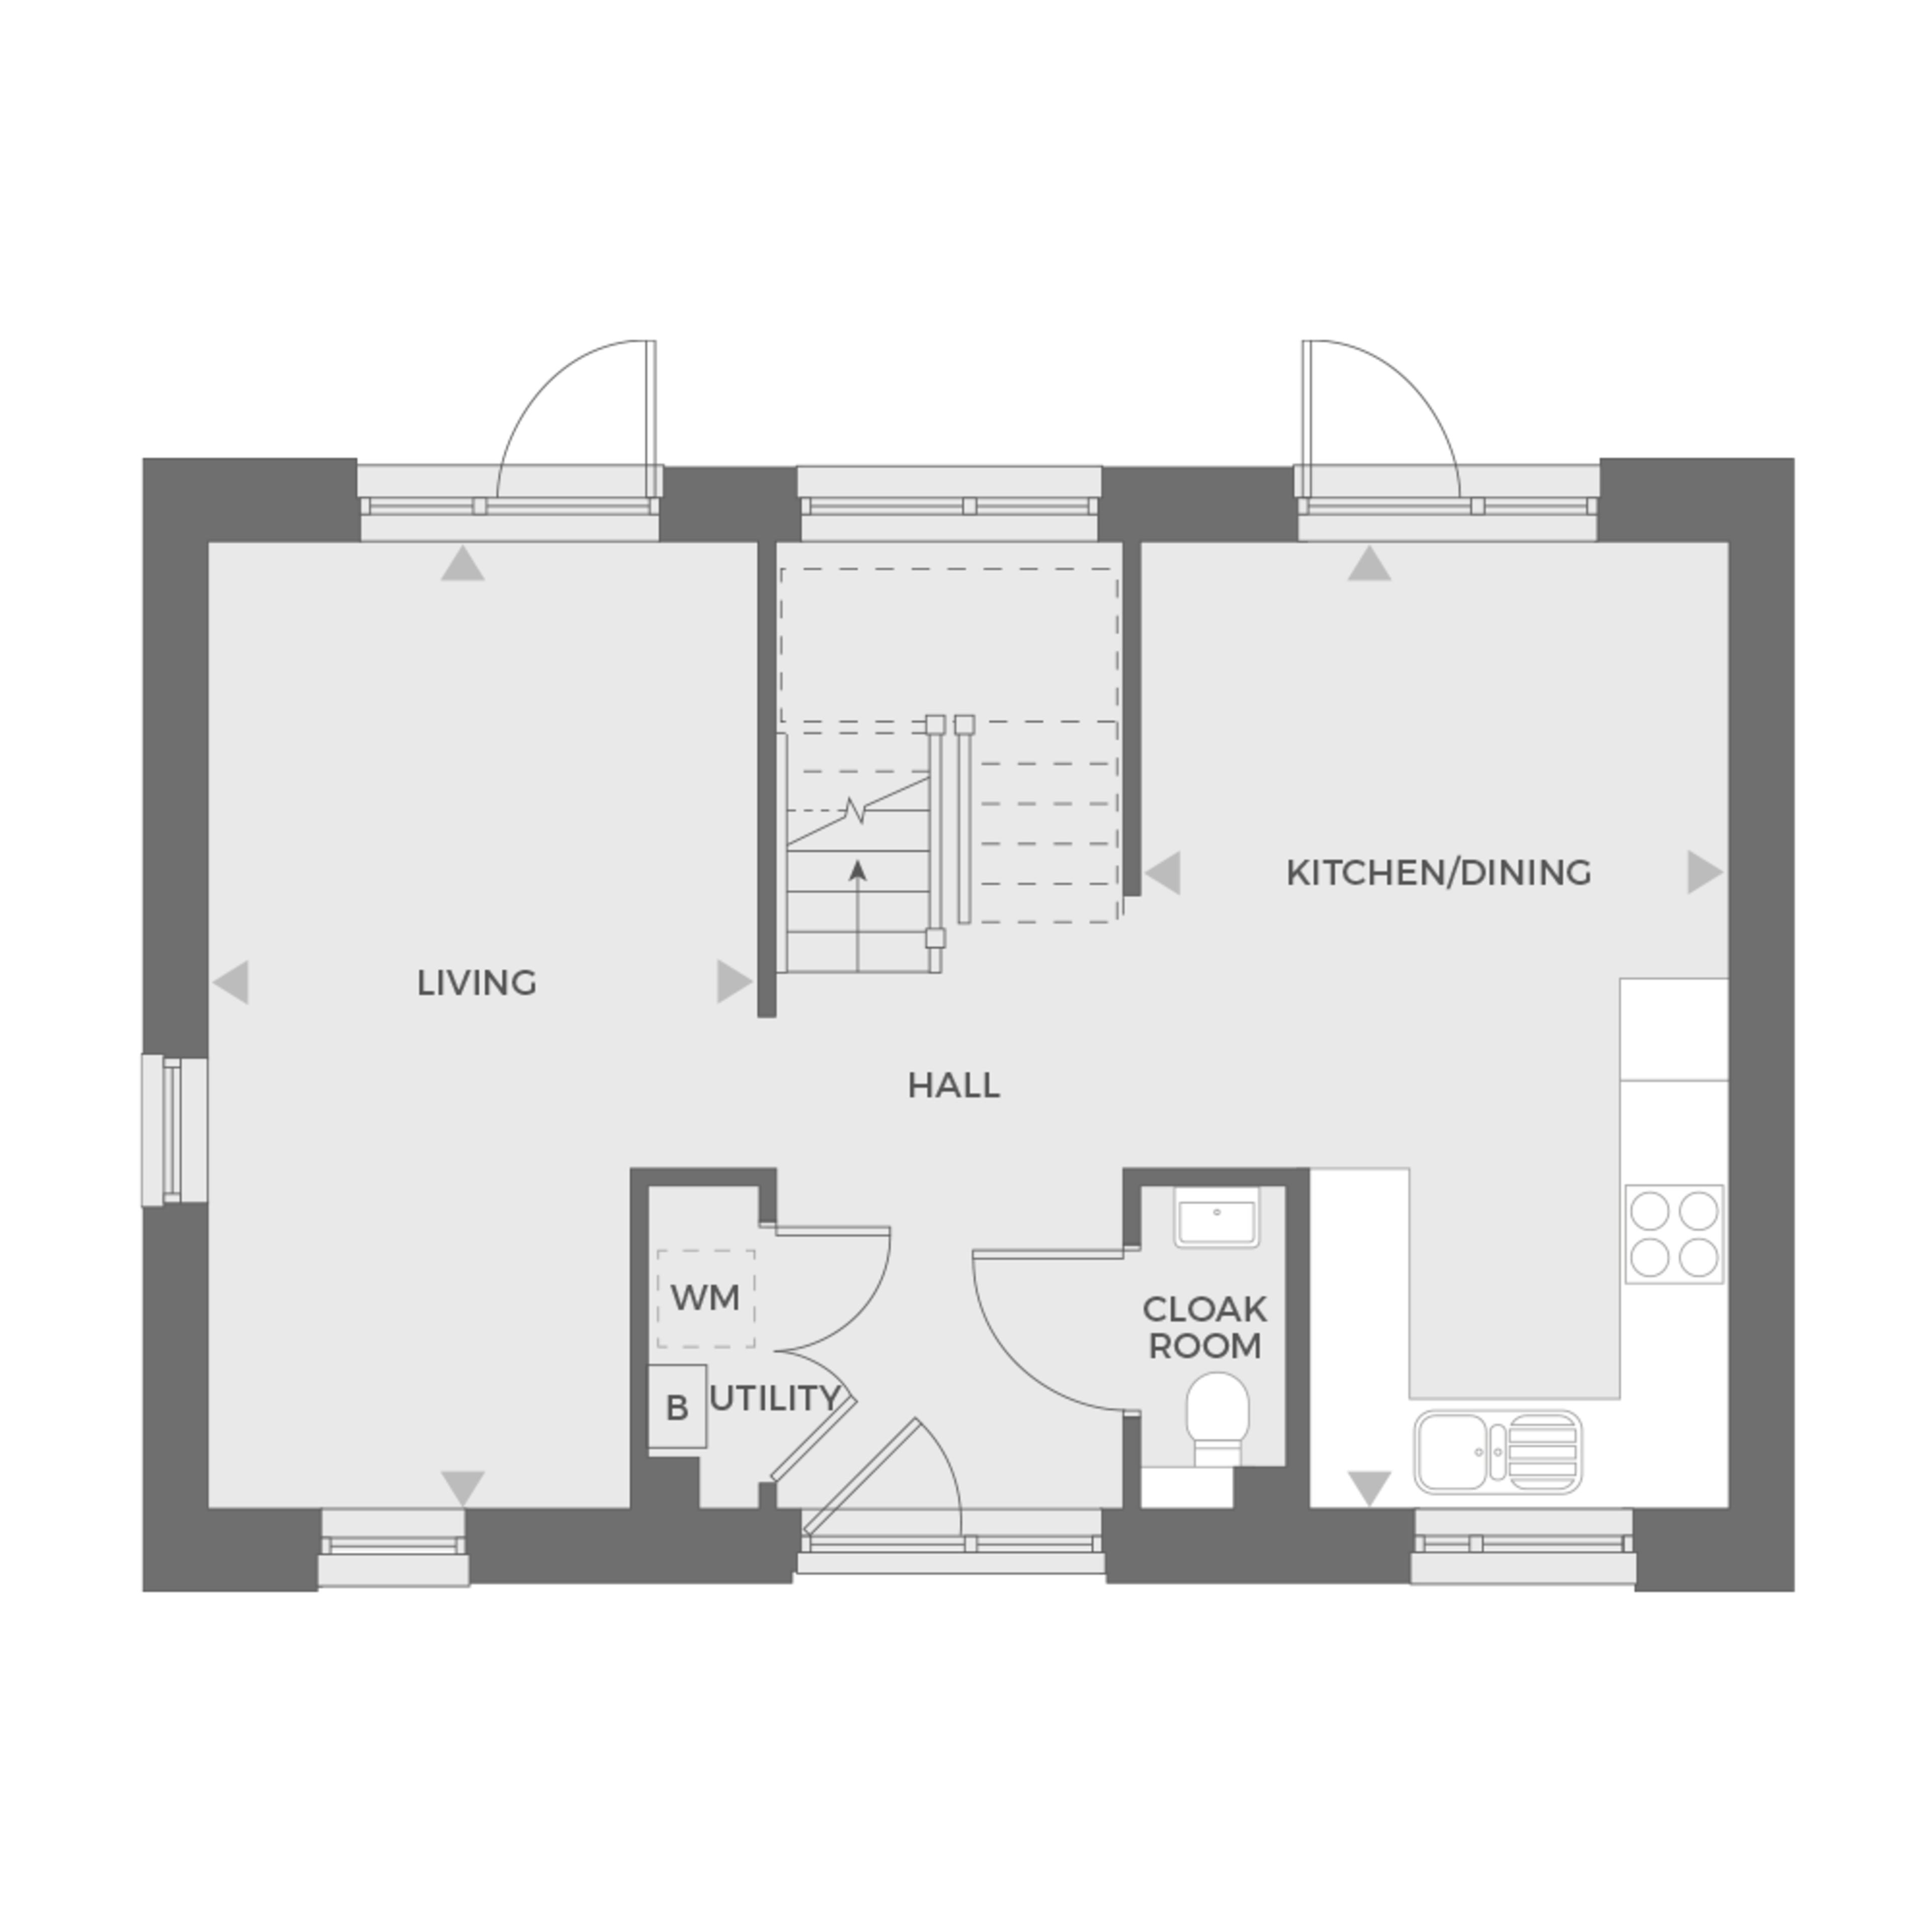 2D floorplan of the ground floor of Jasper house type at Pompadour